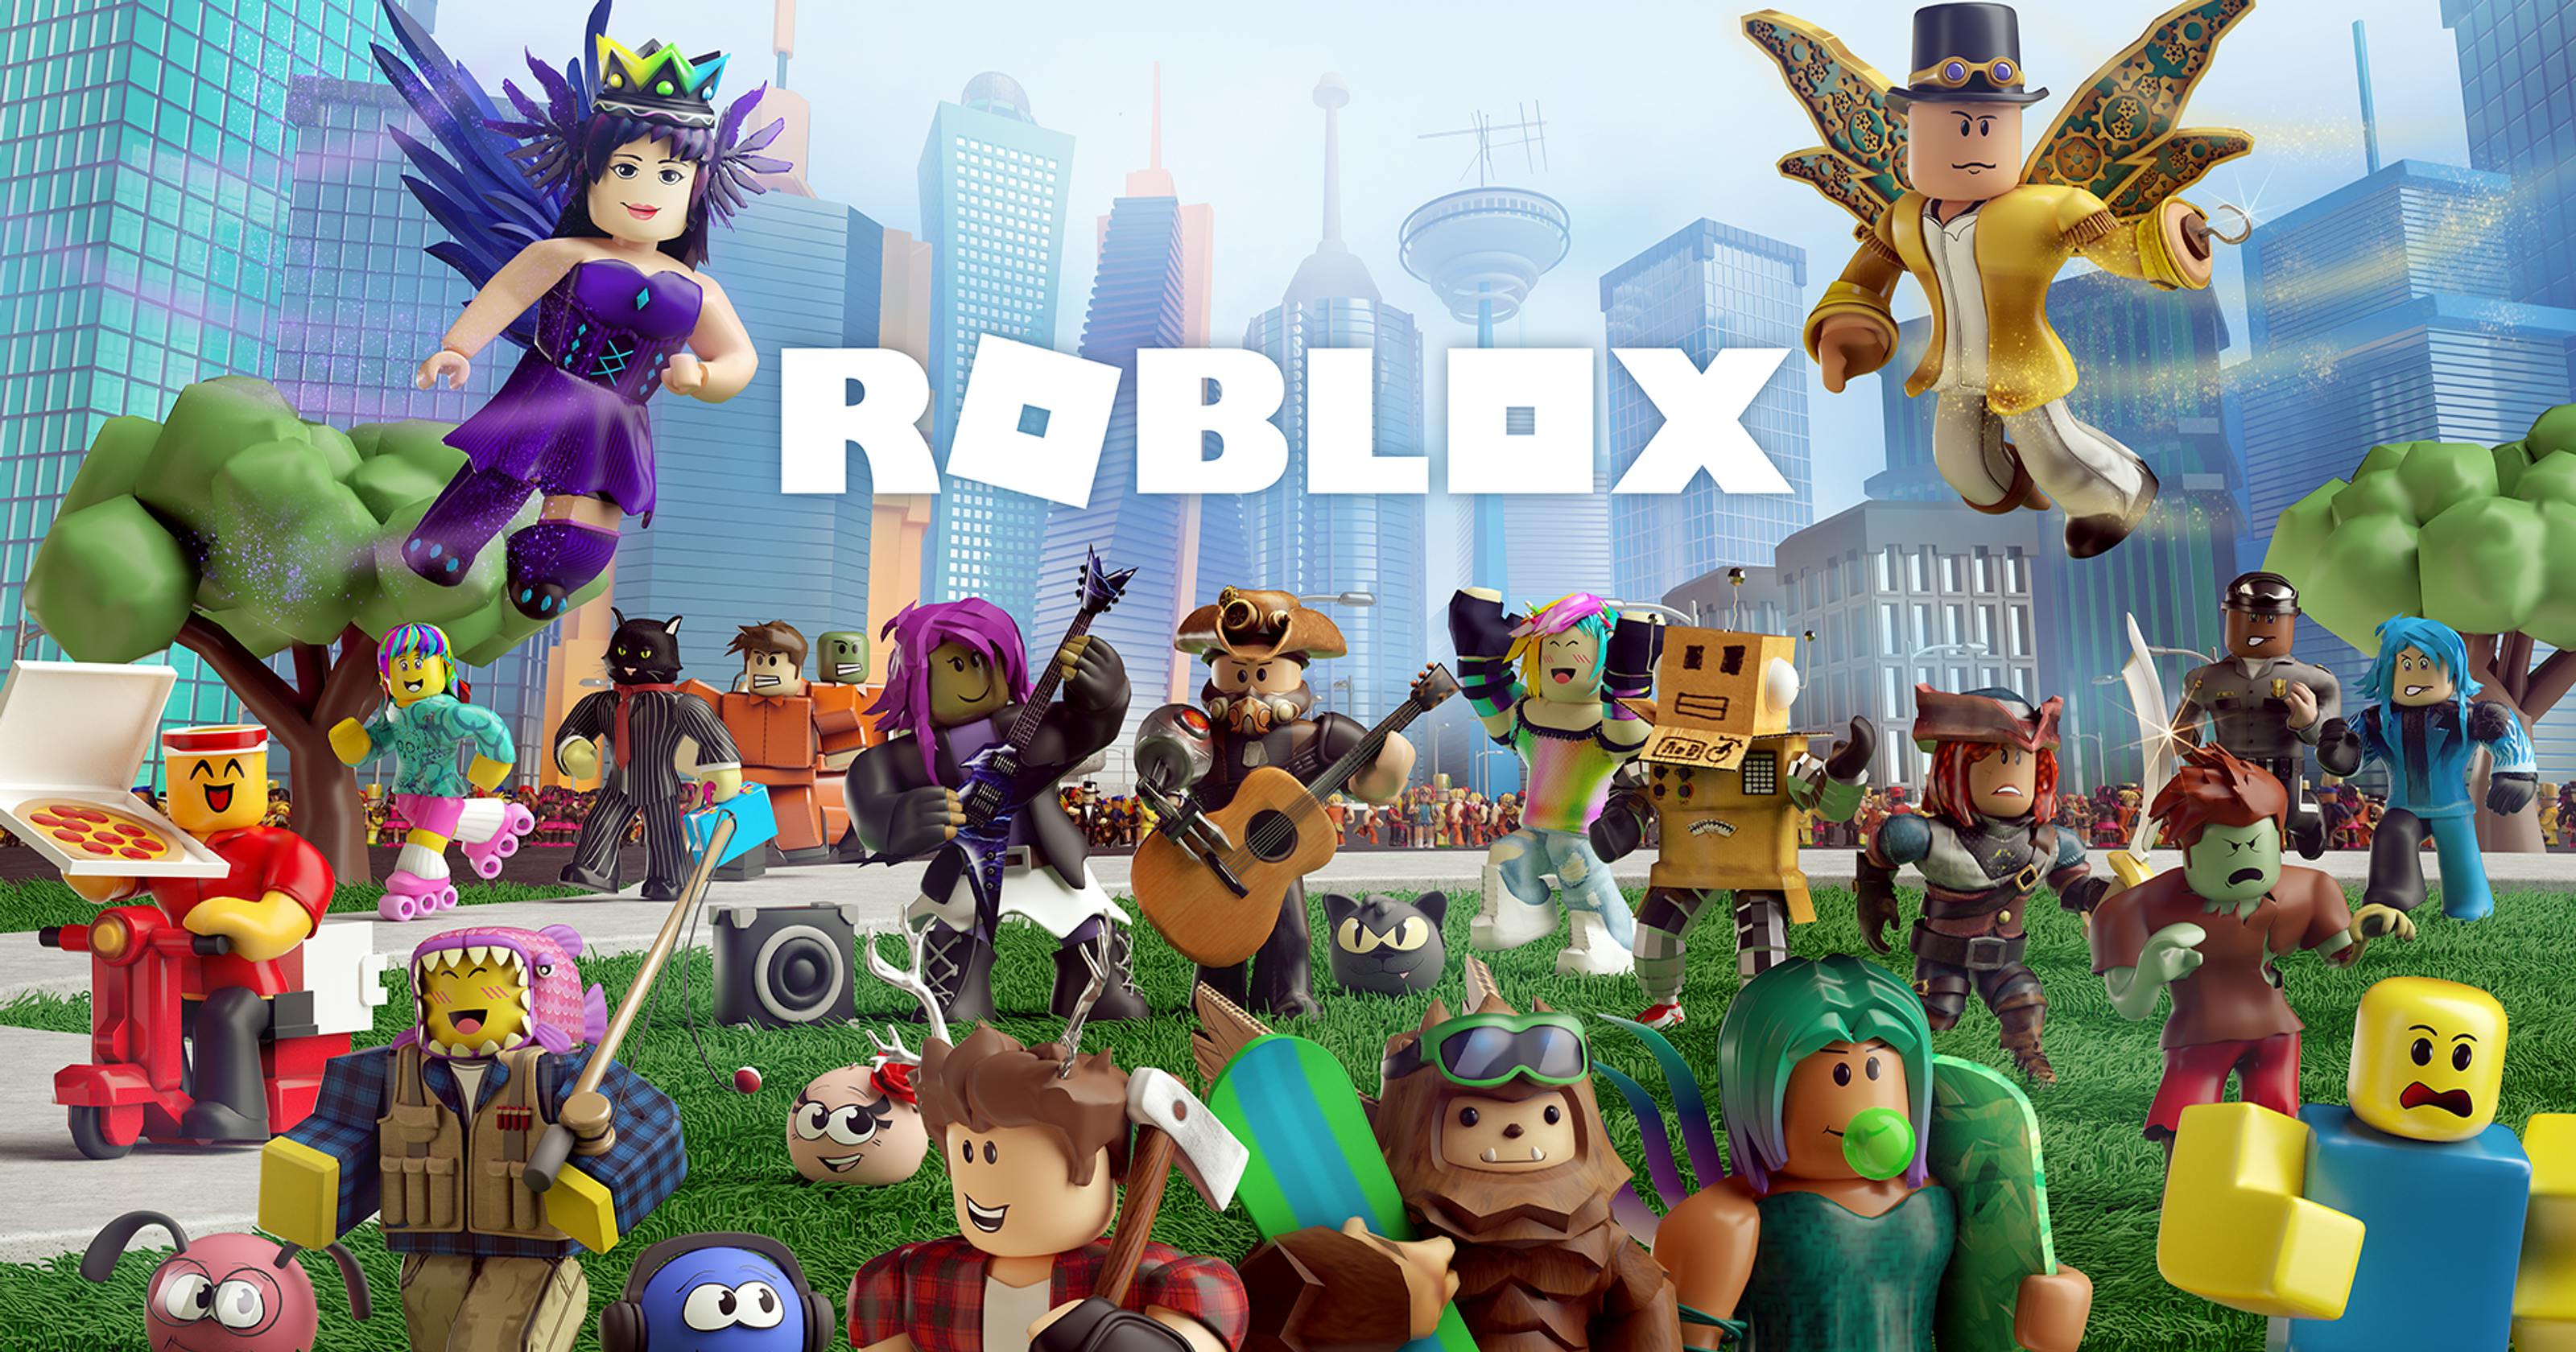 Advanced Roblox Game Coding Summer Camp 29 Jul 2019 - pm in roblox game